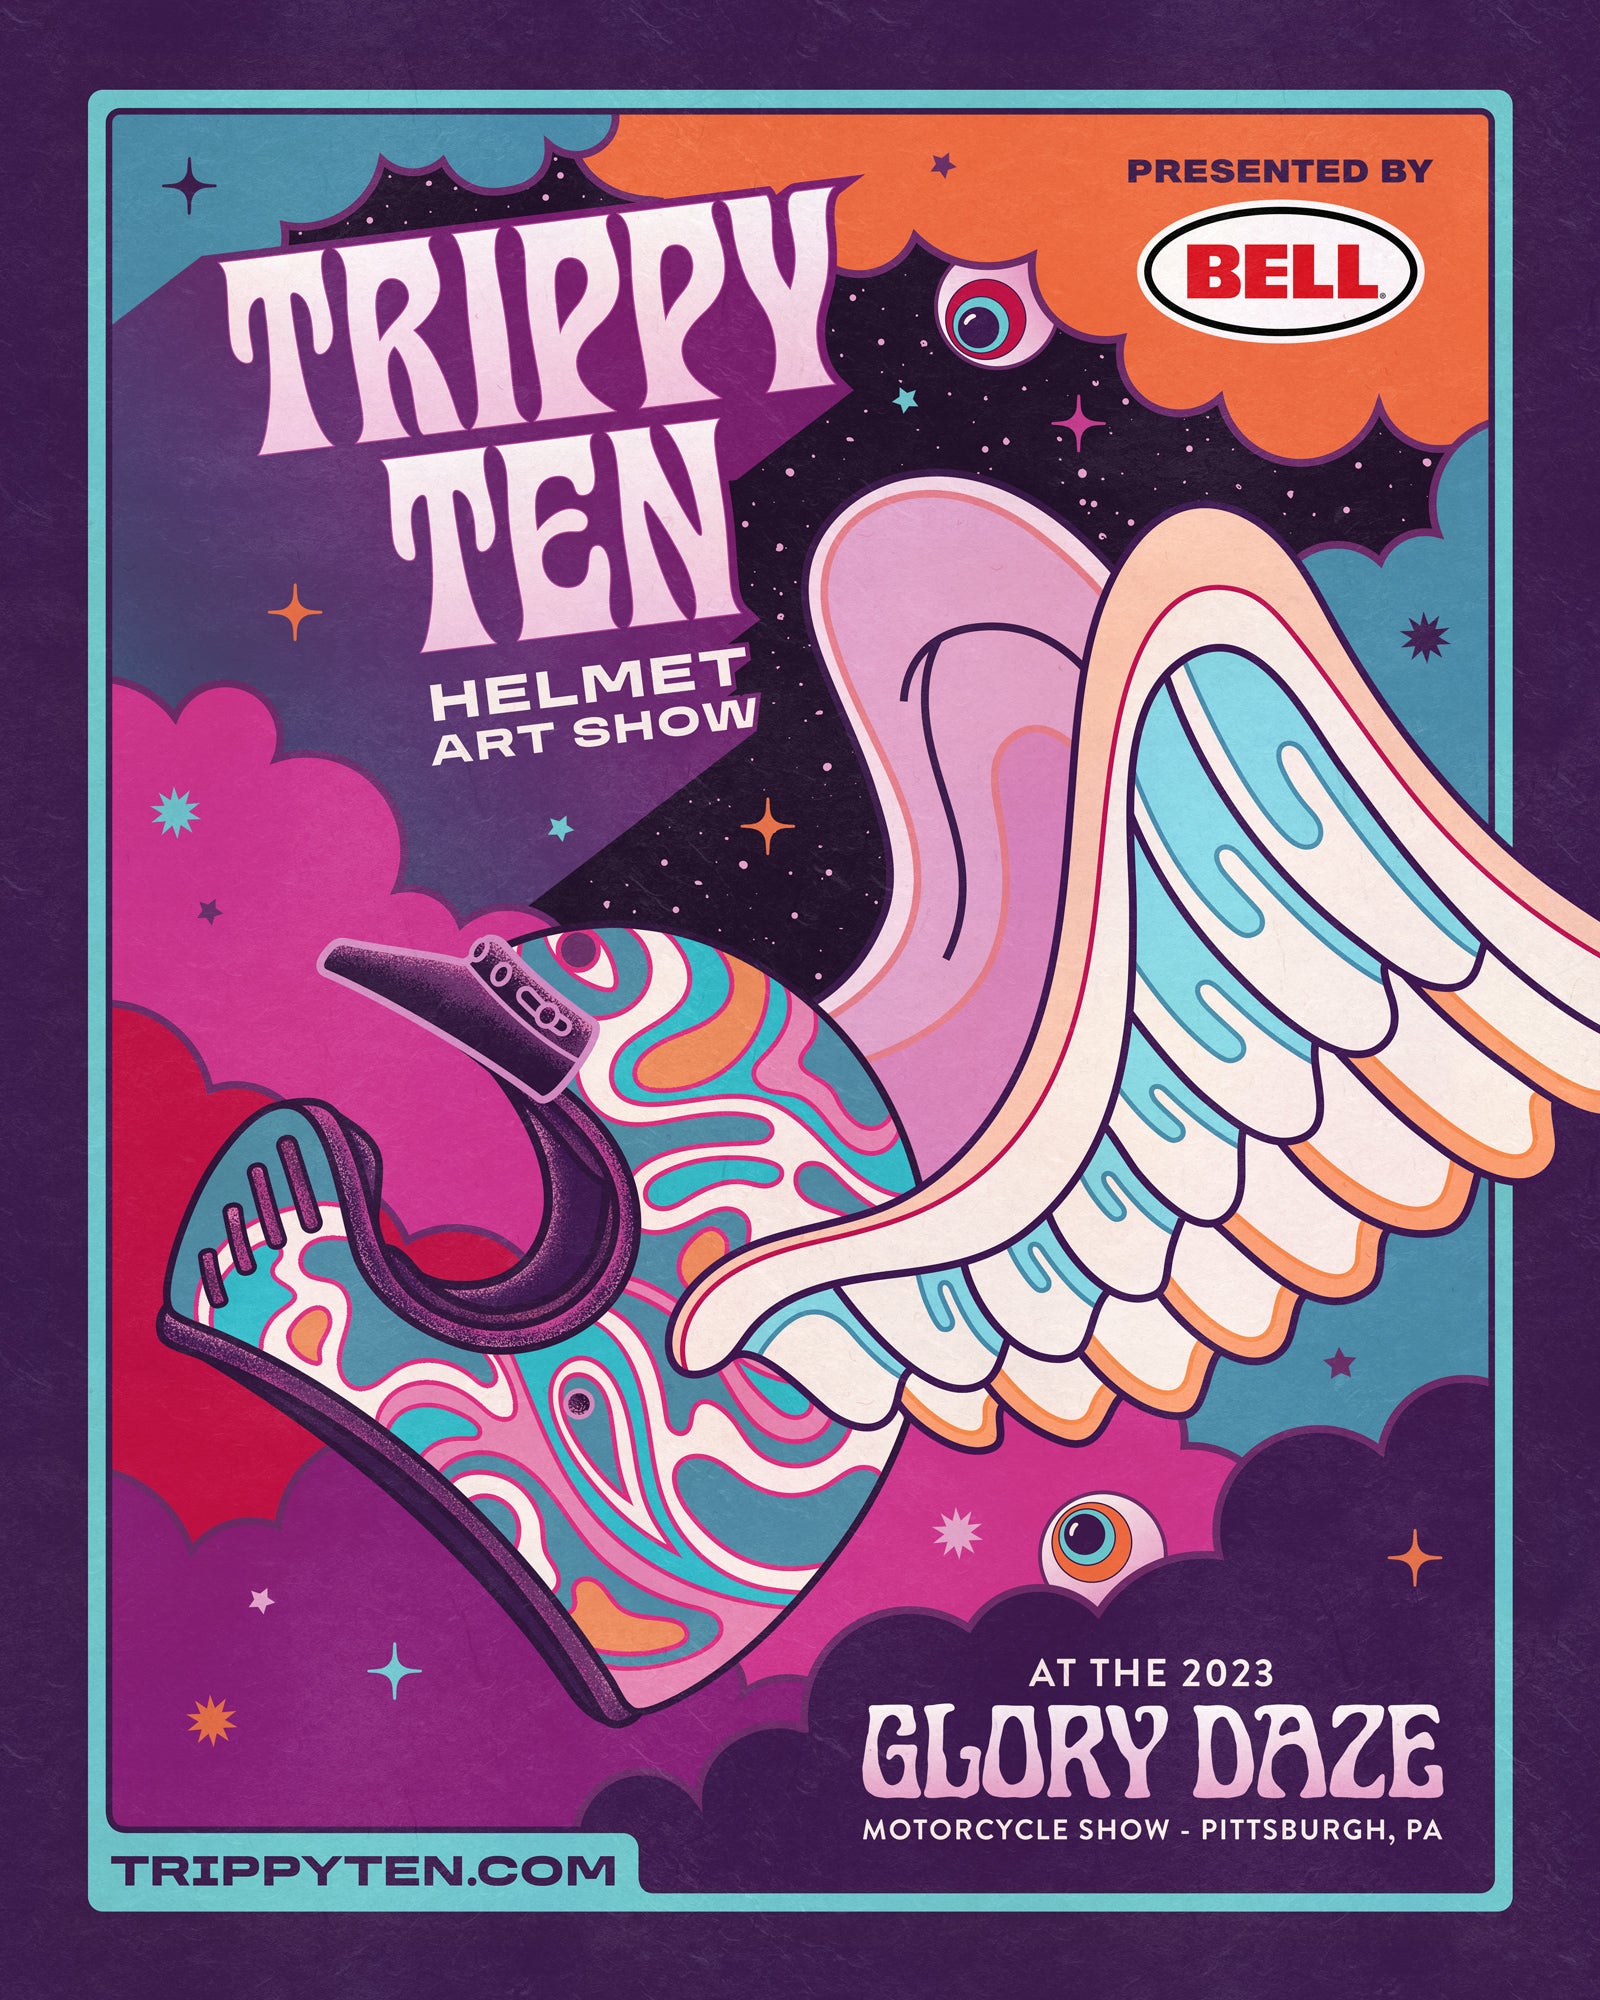 Kurt Diserio artist designer animated illustration poster Glory Daze motorcycle show Trippy Ten helmet pittsburgh